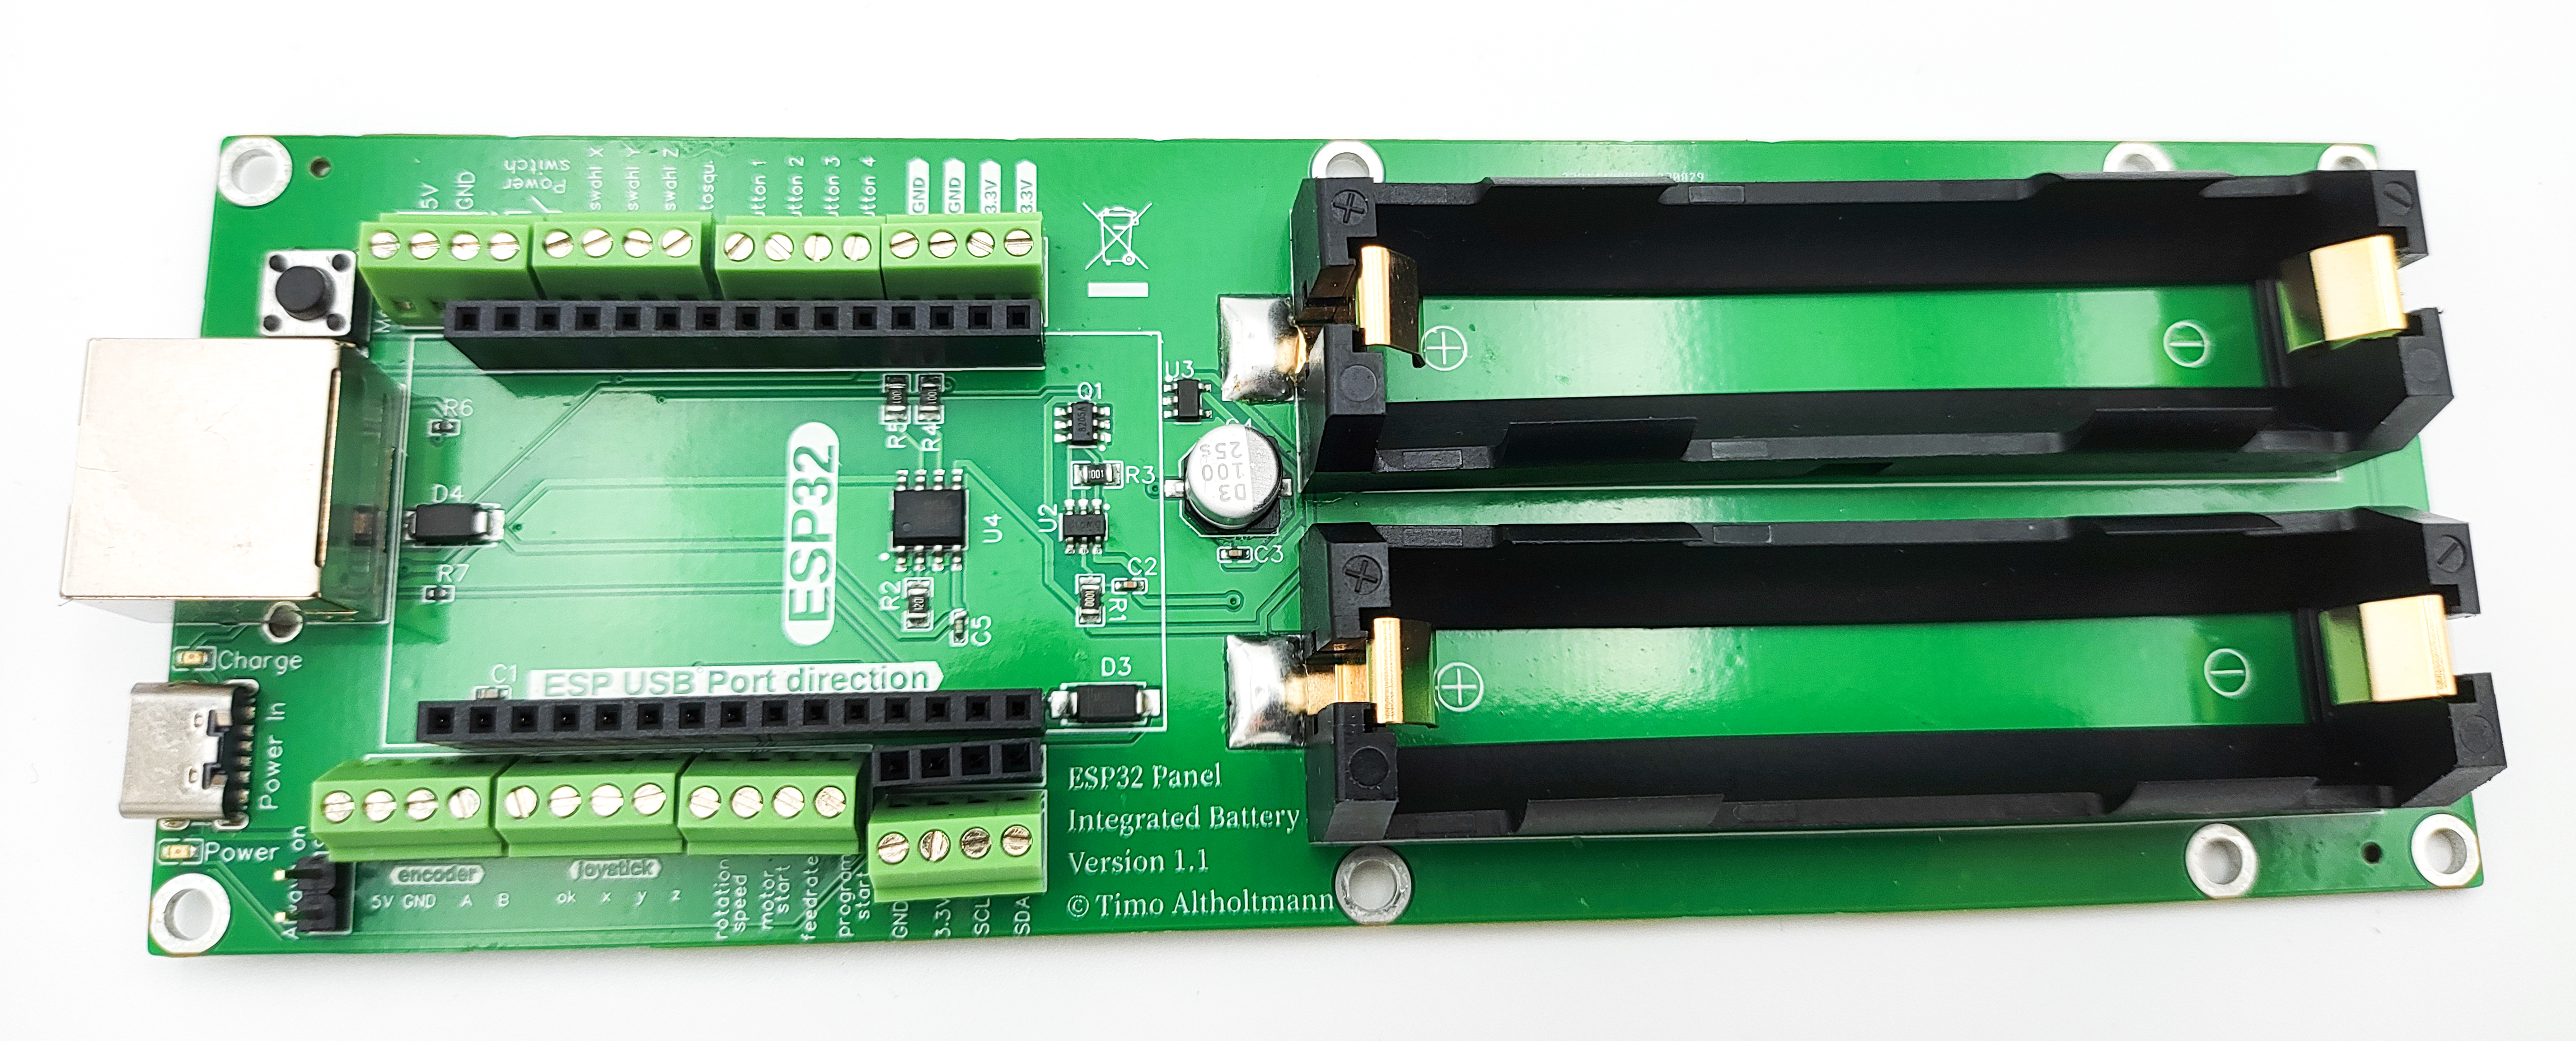 ESP32 Panel Integrated Battery Platine